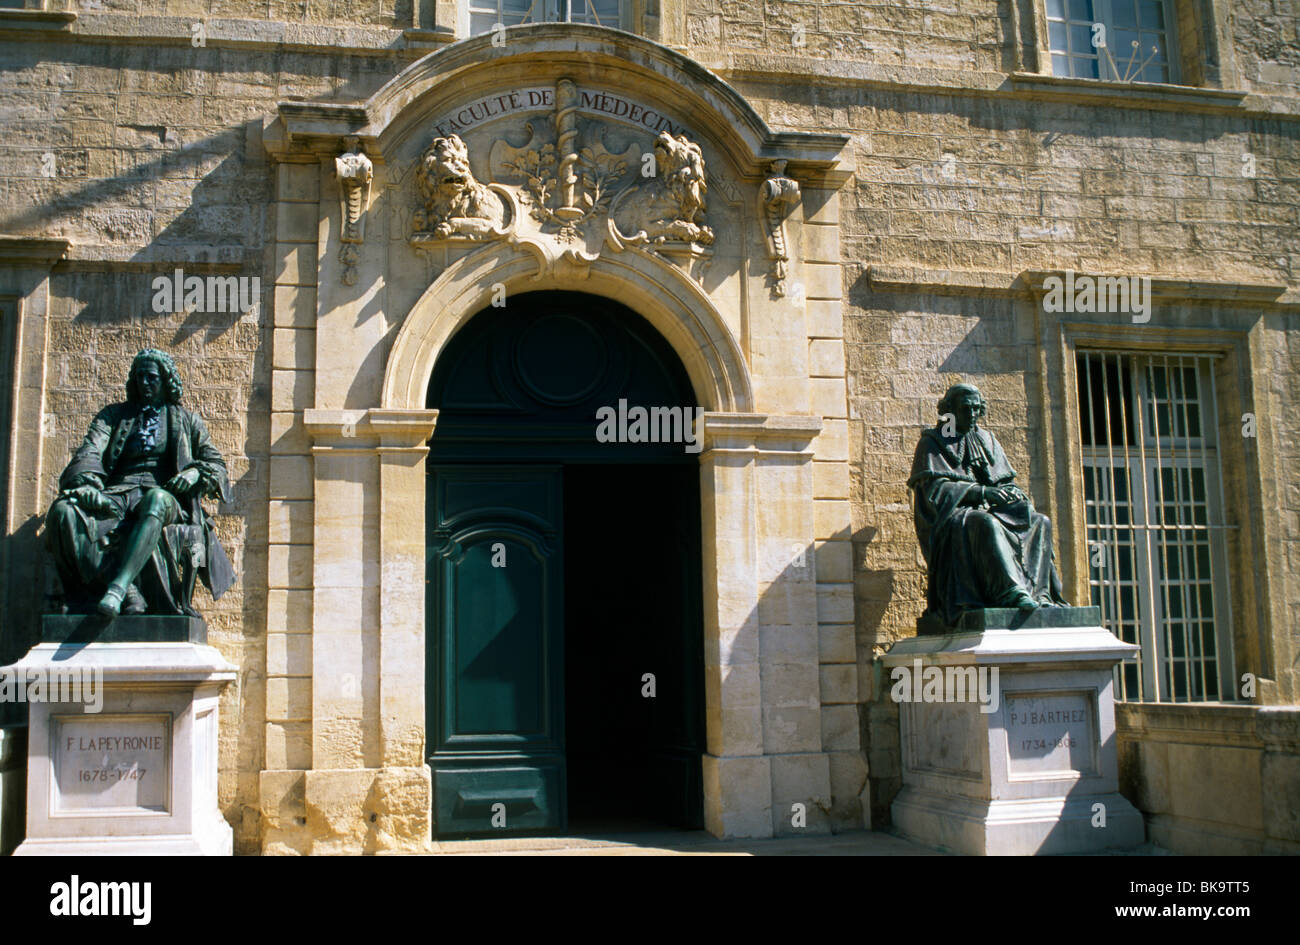 Montpellier France Languedoc-Roussillon Statues Of Paul Joseph Barthez And Francois Gigot De Lapeyronie Entrance Of University Stock Photo